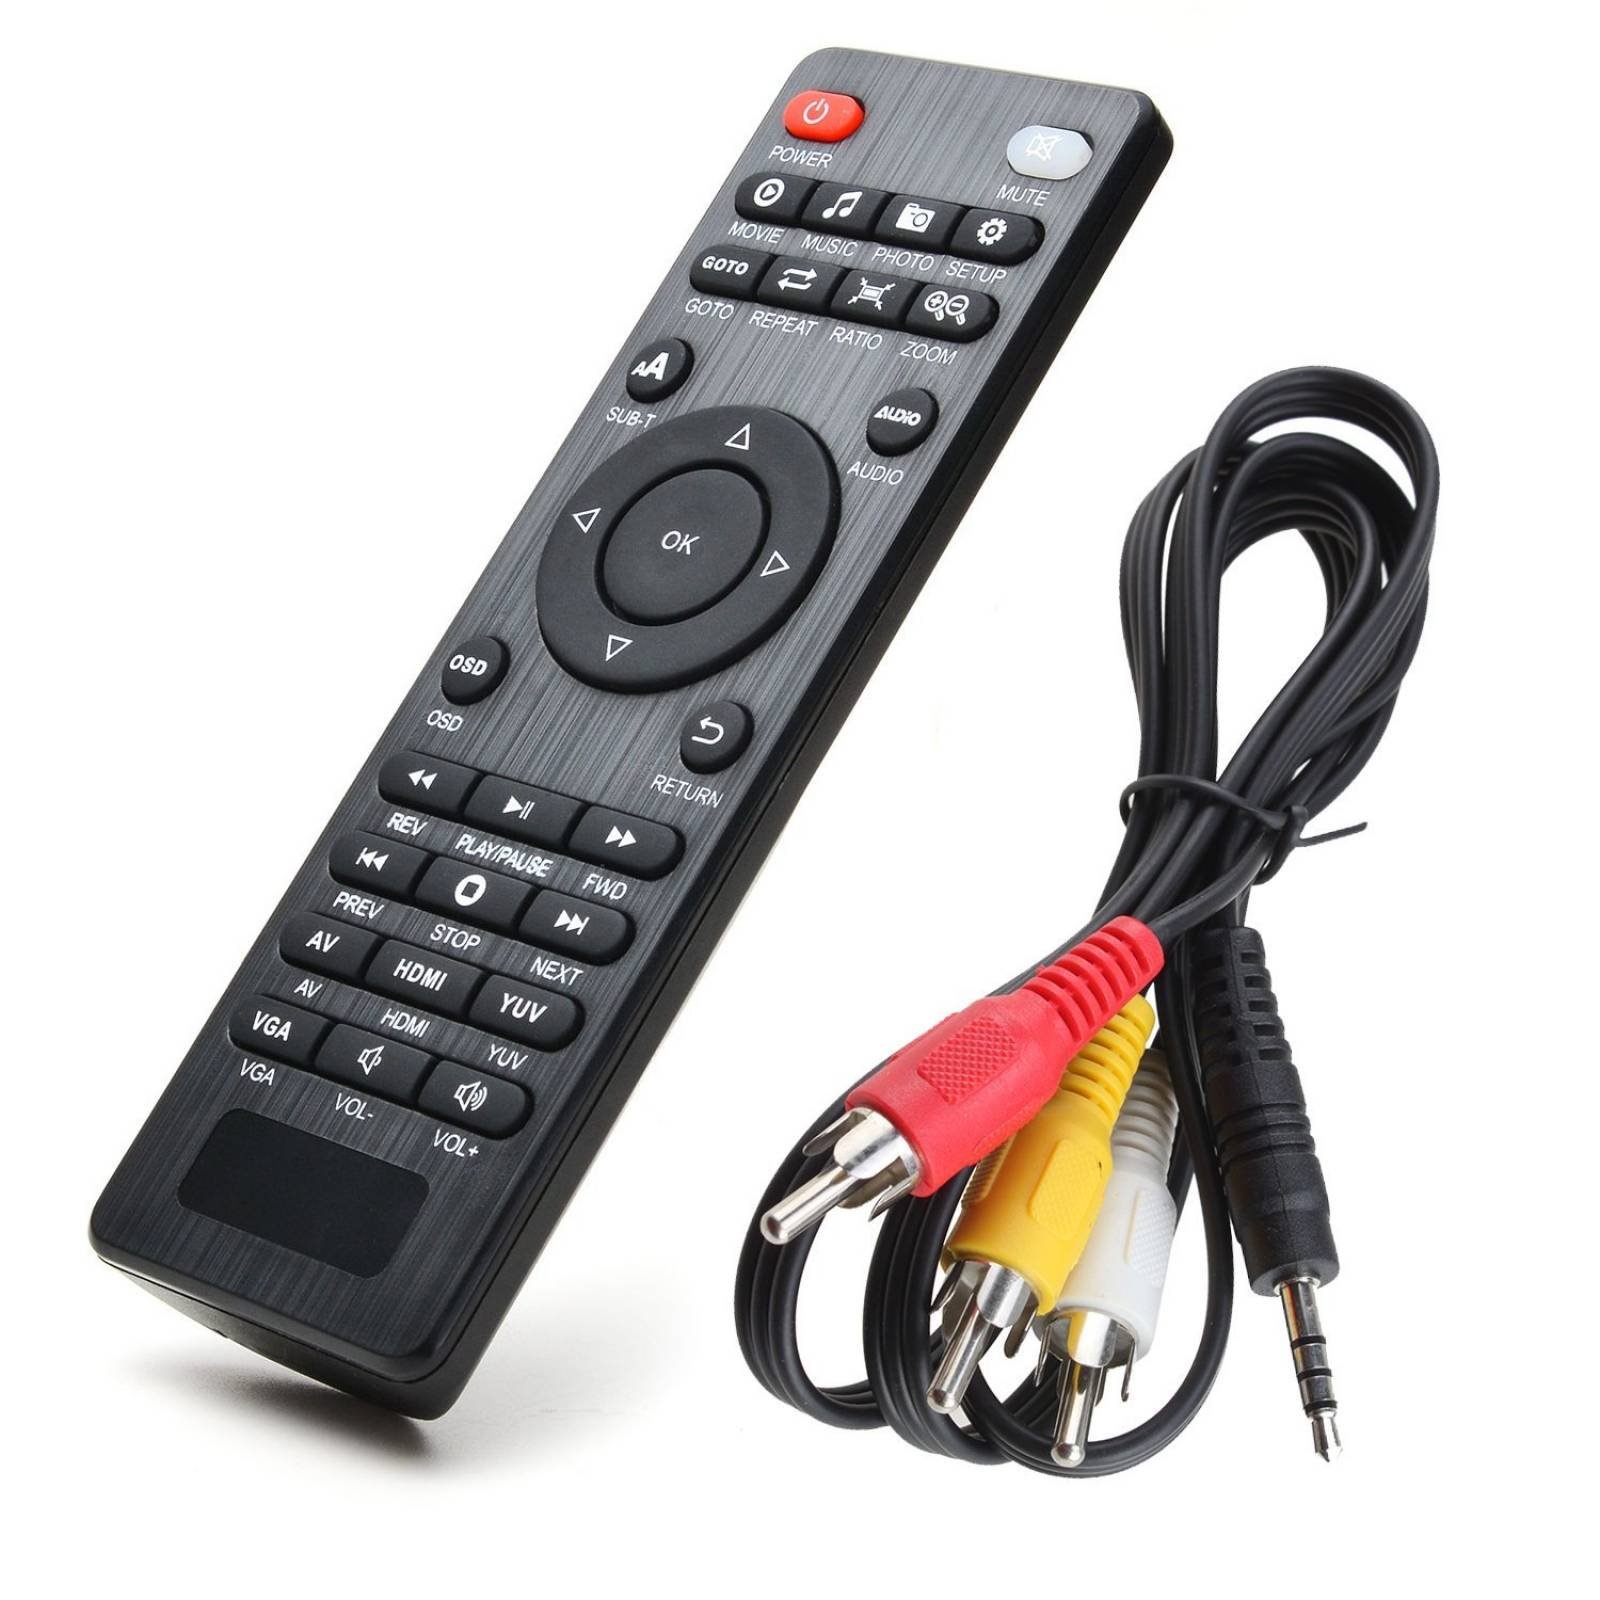 AGPtek negro 1080p HDMI TV Media Player HDMI YPbPr US -Negro